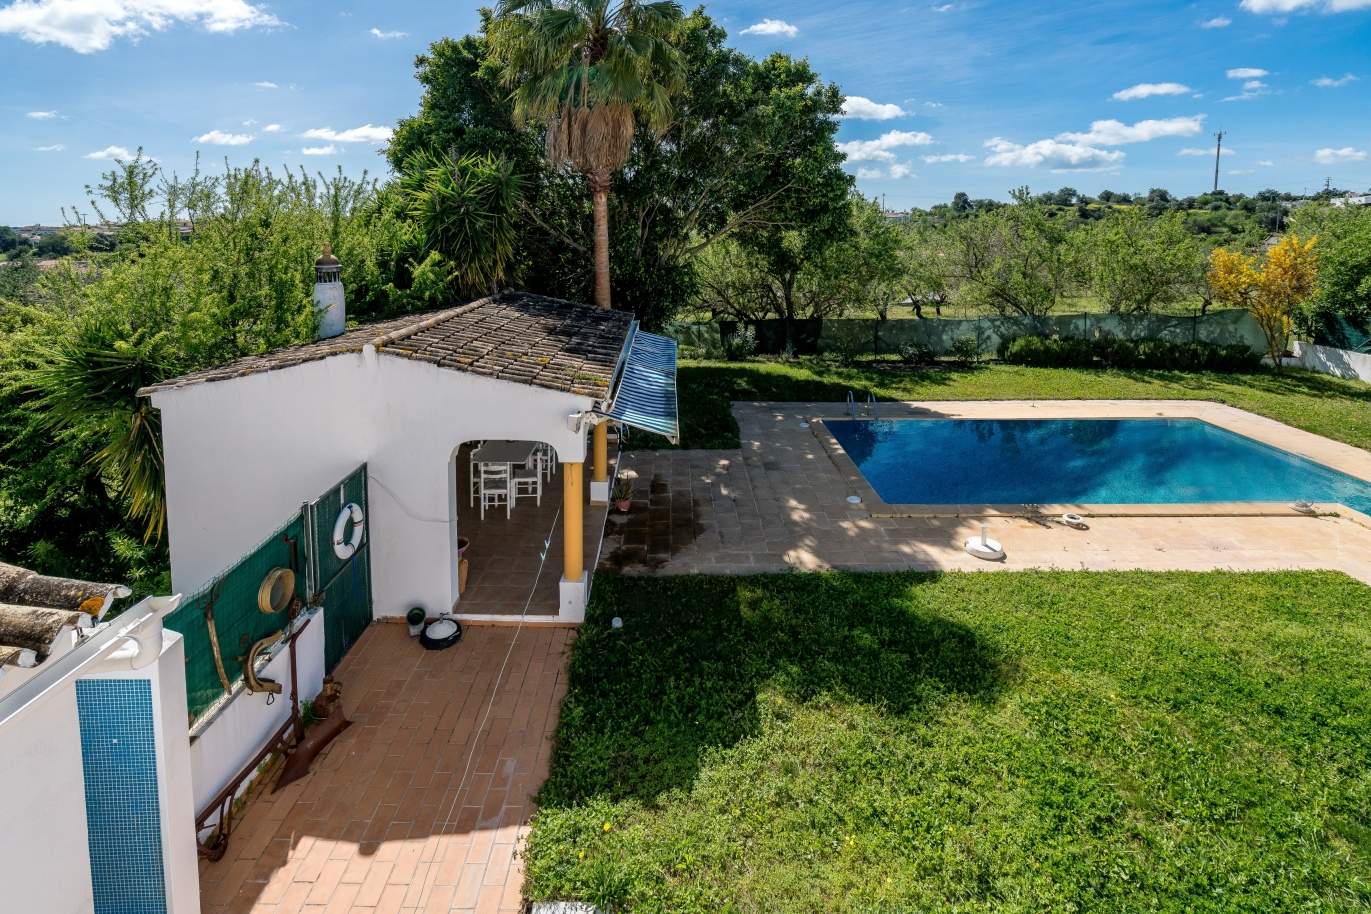 Sale of villa with pool in Boliqueime, Loulé, Algarve, Portugal_98530